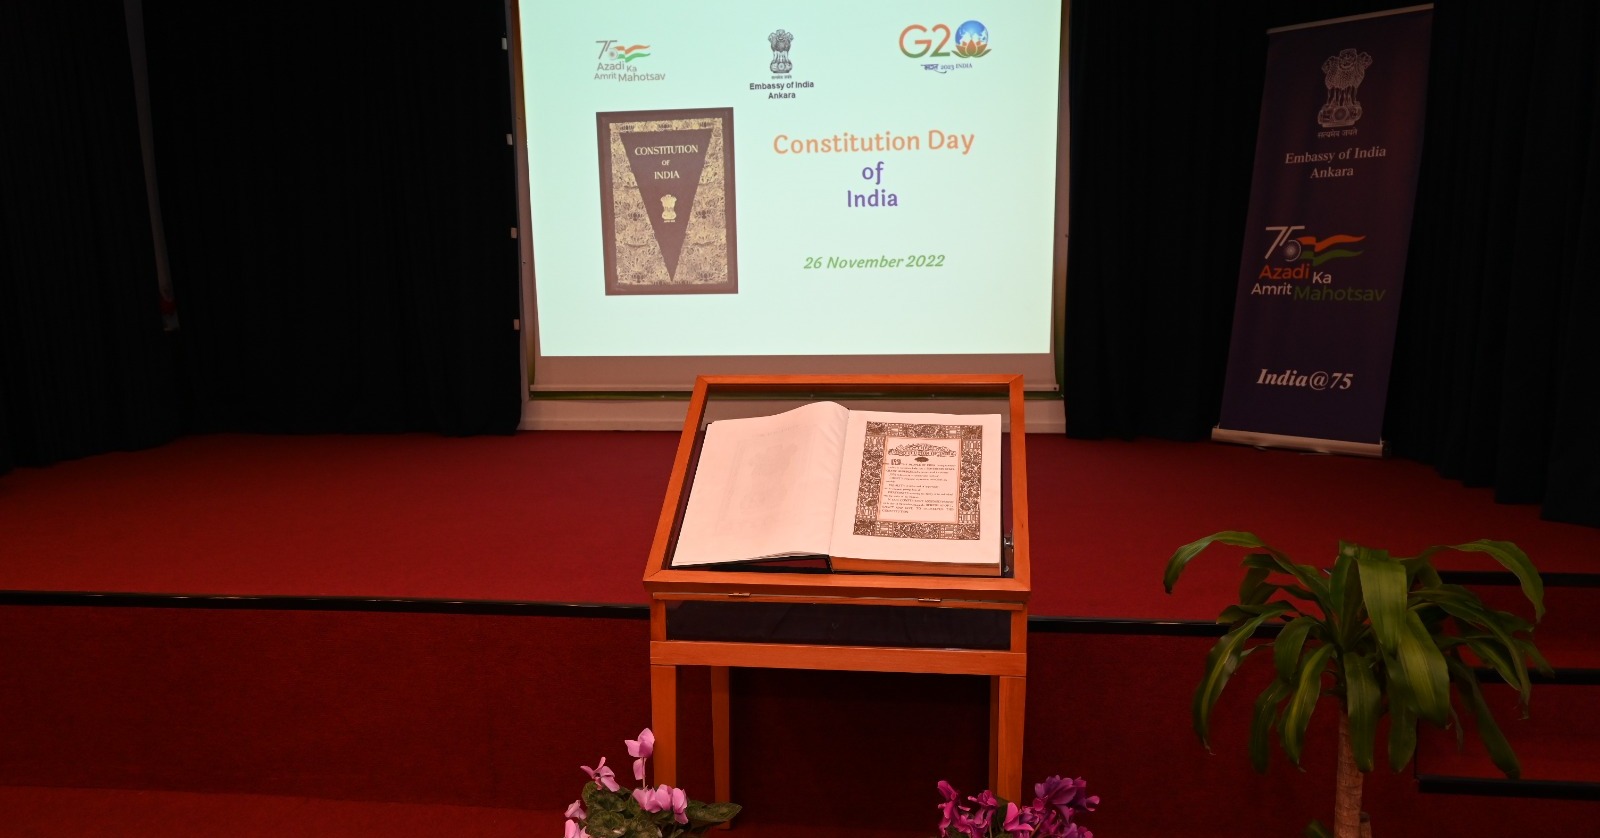 Celebrating Constitution Day of India at Embassy of India, Ankara (26.11.2022)